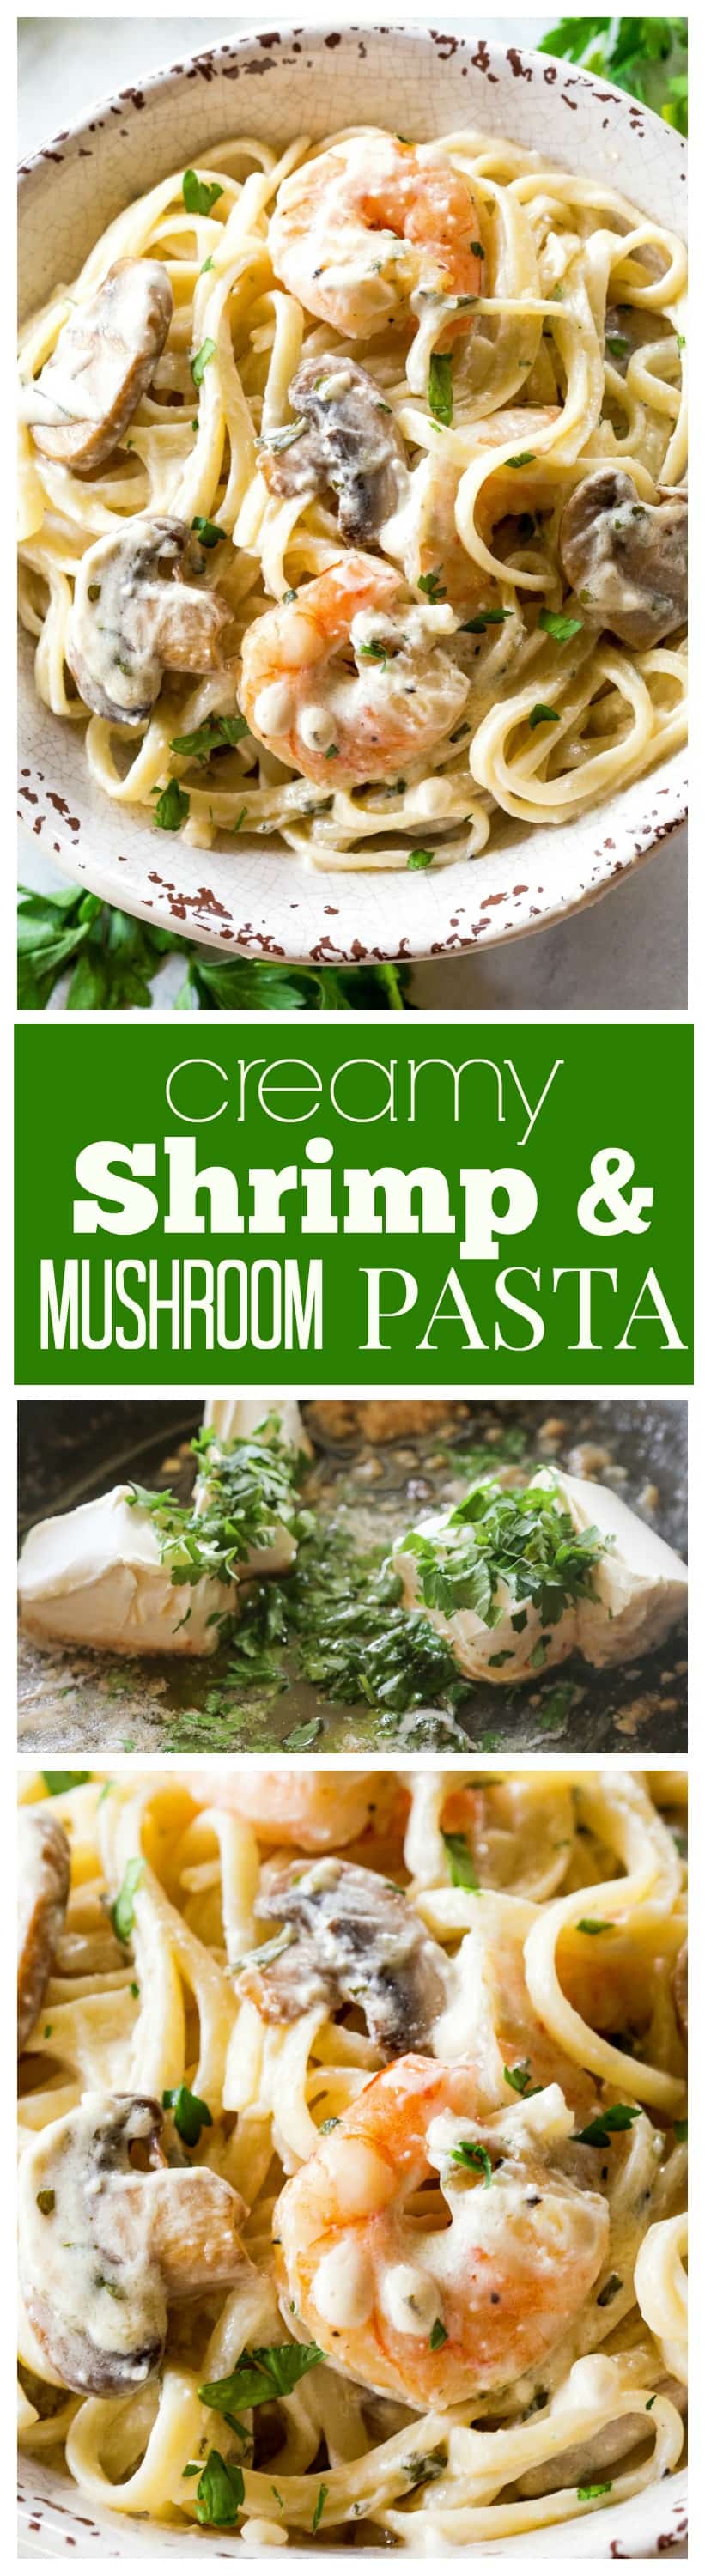 Creamy Shrimp and Mushroom Pasta - so easy and done in under 20 minutes. #shrimp #mushroom #pasta #dinner #recipe